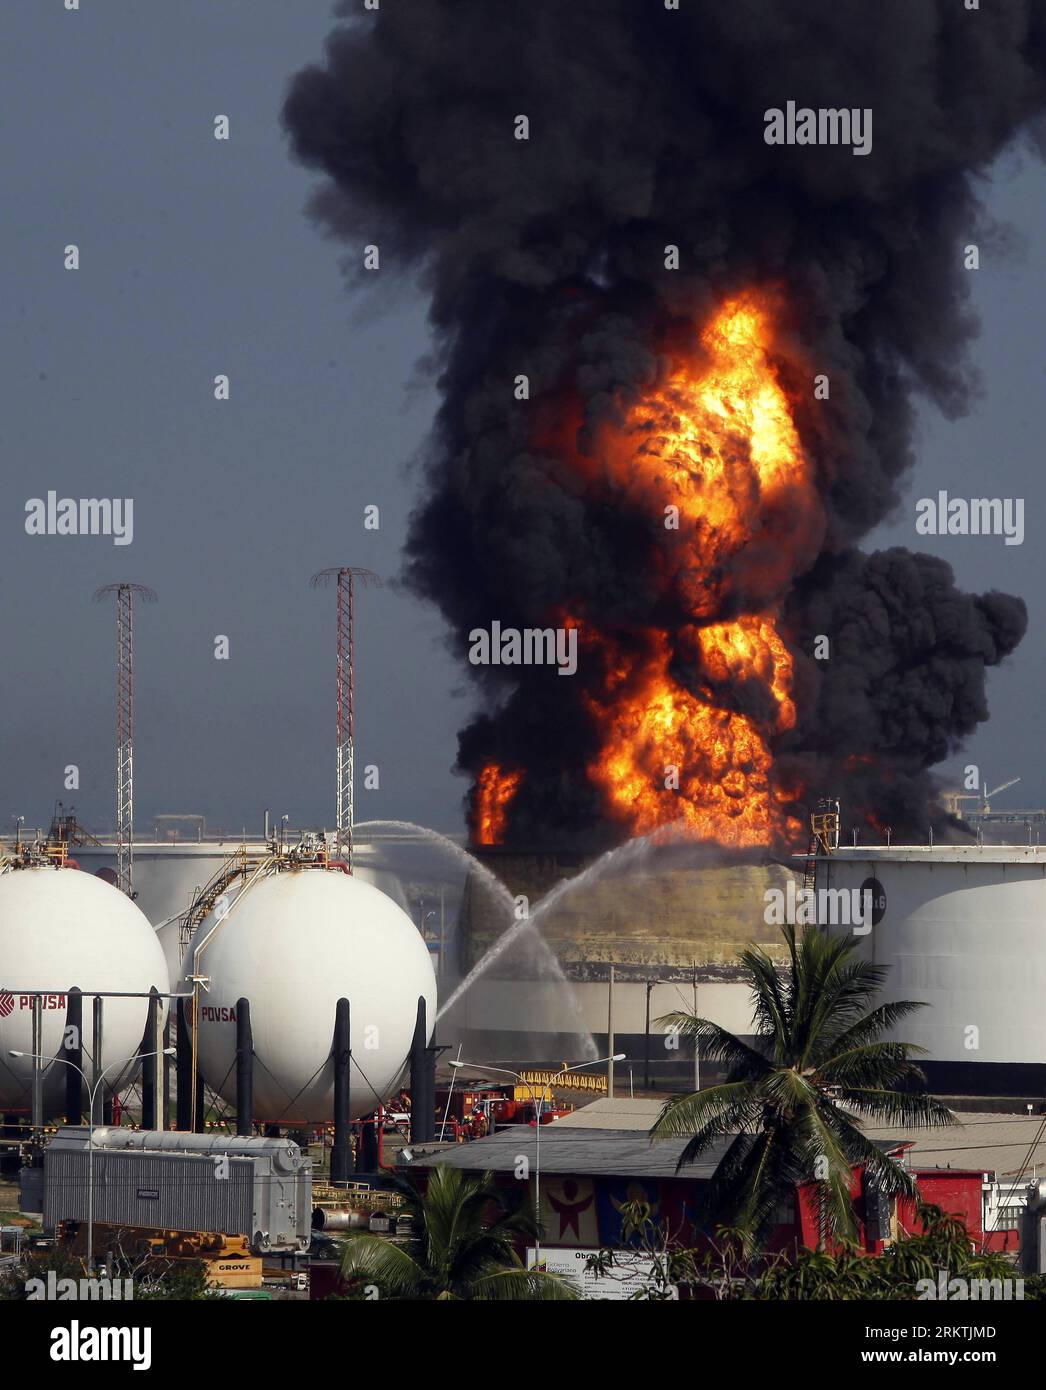 Bildnummer: 58495005  Datum: 20.09.2012  Copyright: imago/Xinhua EL PALITO, Sept. 20, 2012 (Xinhua) -- A dense column of smog rises from one of the fuel tanks at an oil refinery in Puerto Cabello, Venezuela, on Sept. 20, 2012. Two oil tanks at an oil refinery in central Venezuela caught fire on Wednesday, Venezuelan Energy Minister Rafael Ramirez said. (Xinhua/Juan Carlos Hernandez) VENEZUELA-EL PALITO-ACCIDENT-FIRE PUBLICATIONxNOTxINxCHN Gesellschaft Raffinerie Brand Feuer Blitz Blitzeinschlag xdp x0x 2012 hoch premiumd     58495005 Date 20 09 2012 Copyright Imago XINHUA El Palito Sept 20 201 Stock Photo